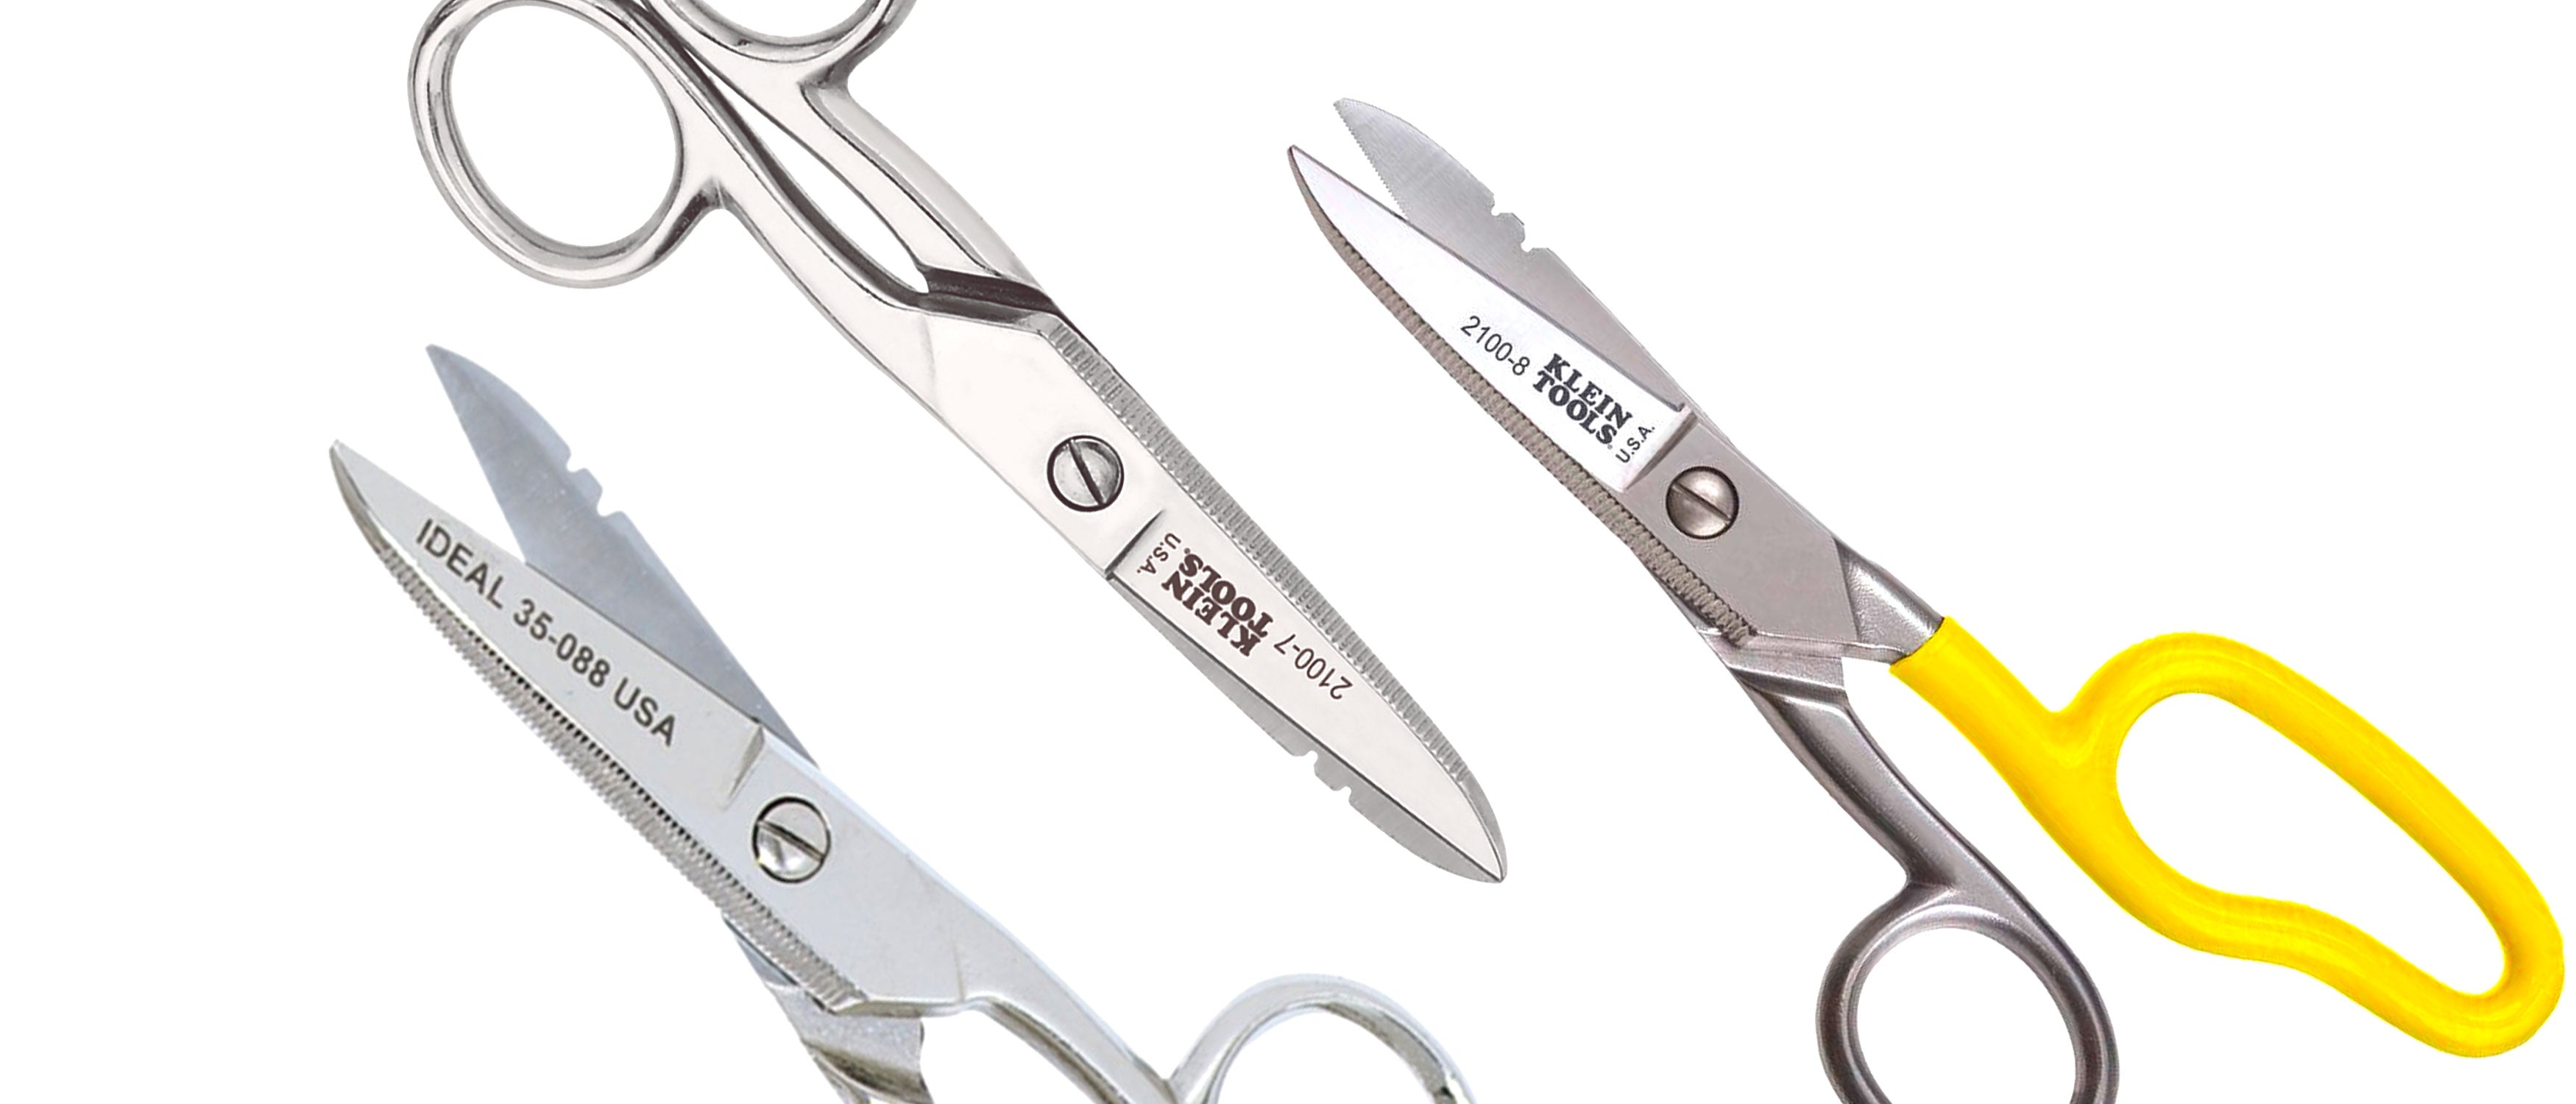 Klein Tools - Large Broad Blade Utility Shear 22002